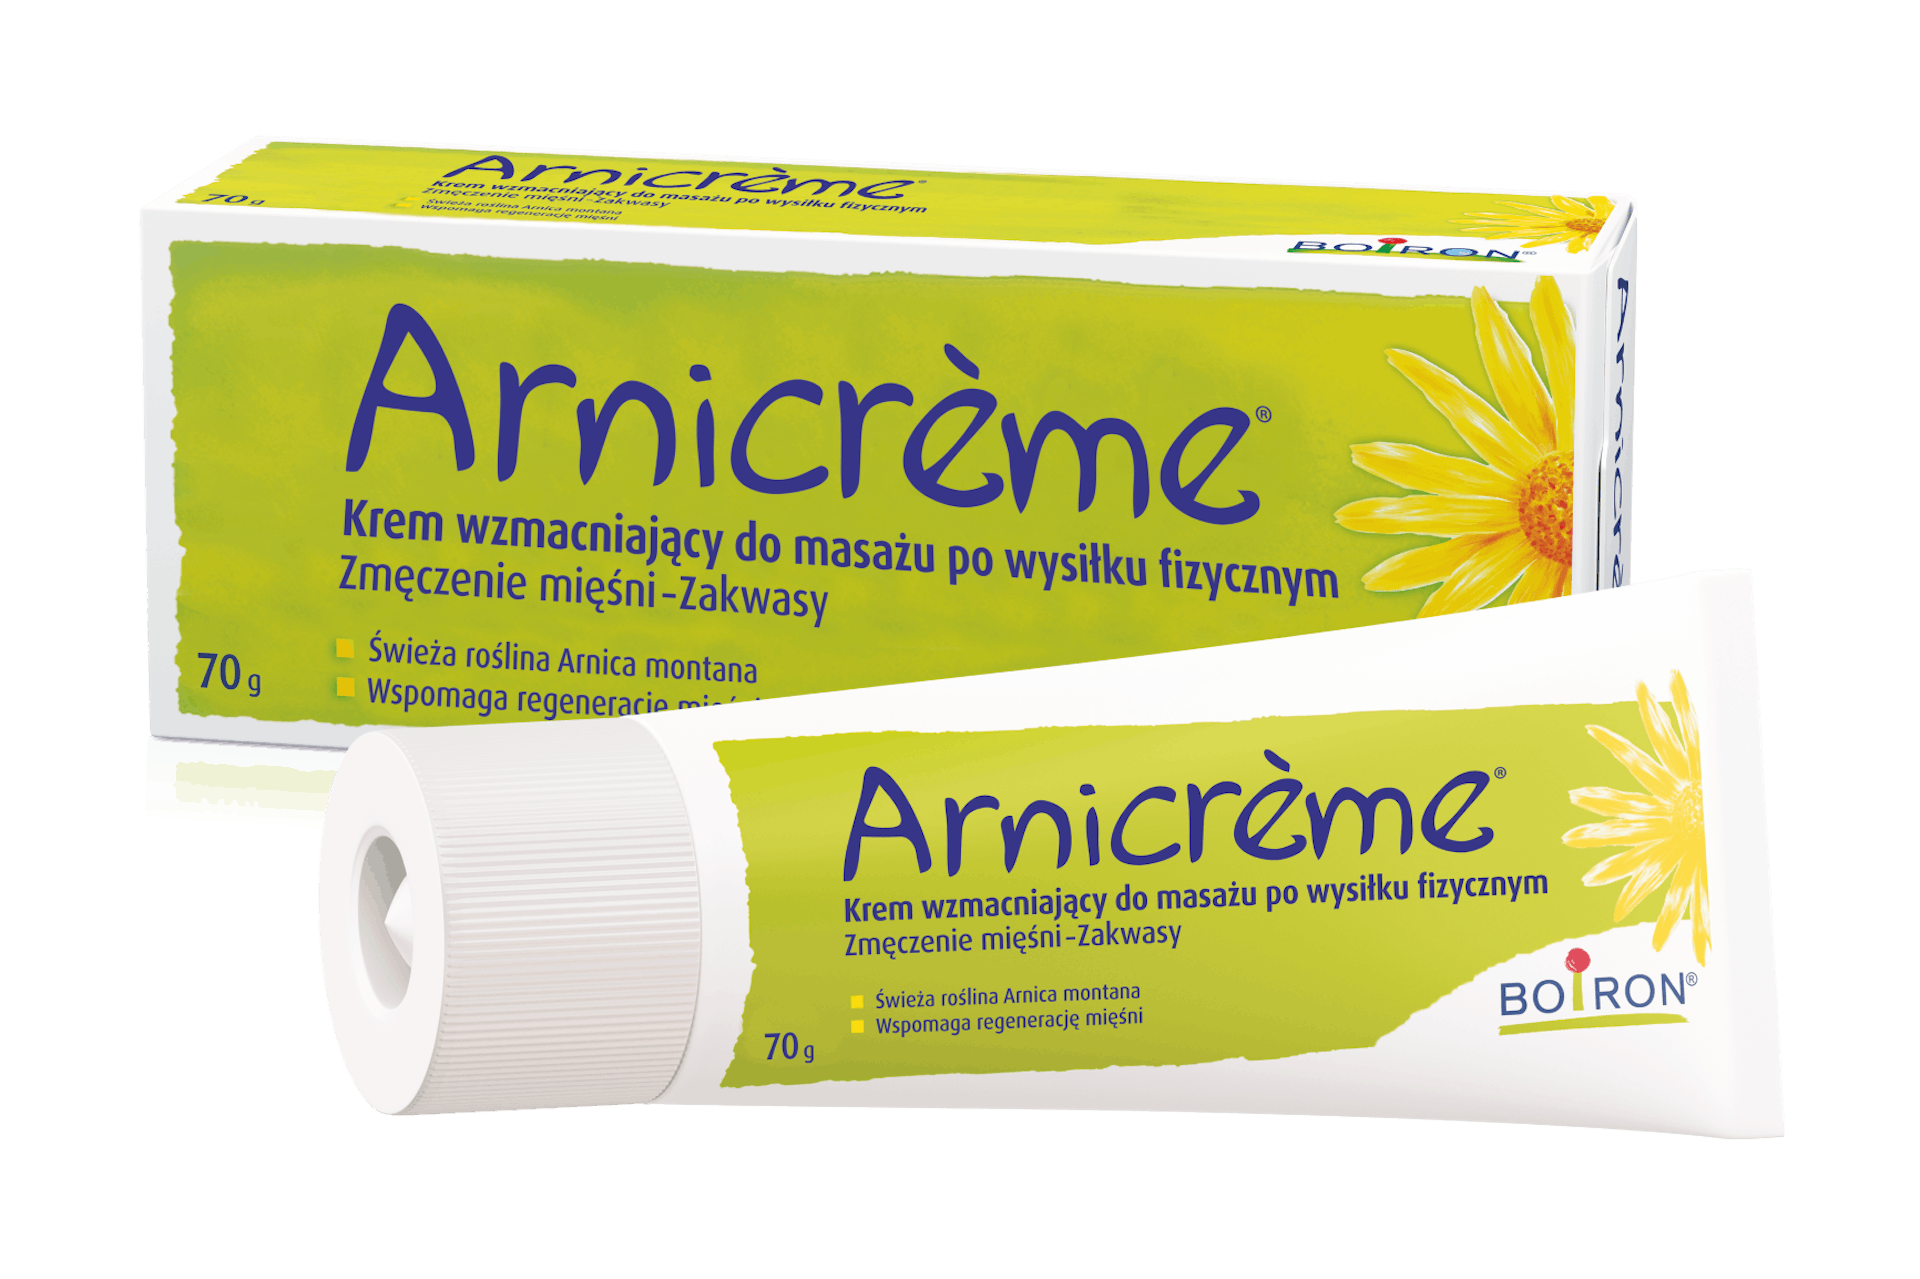 Arnicreme